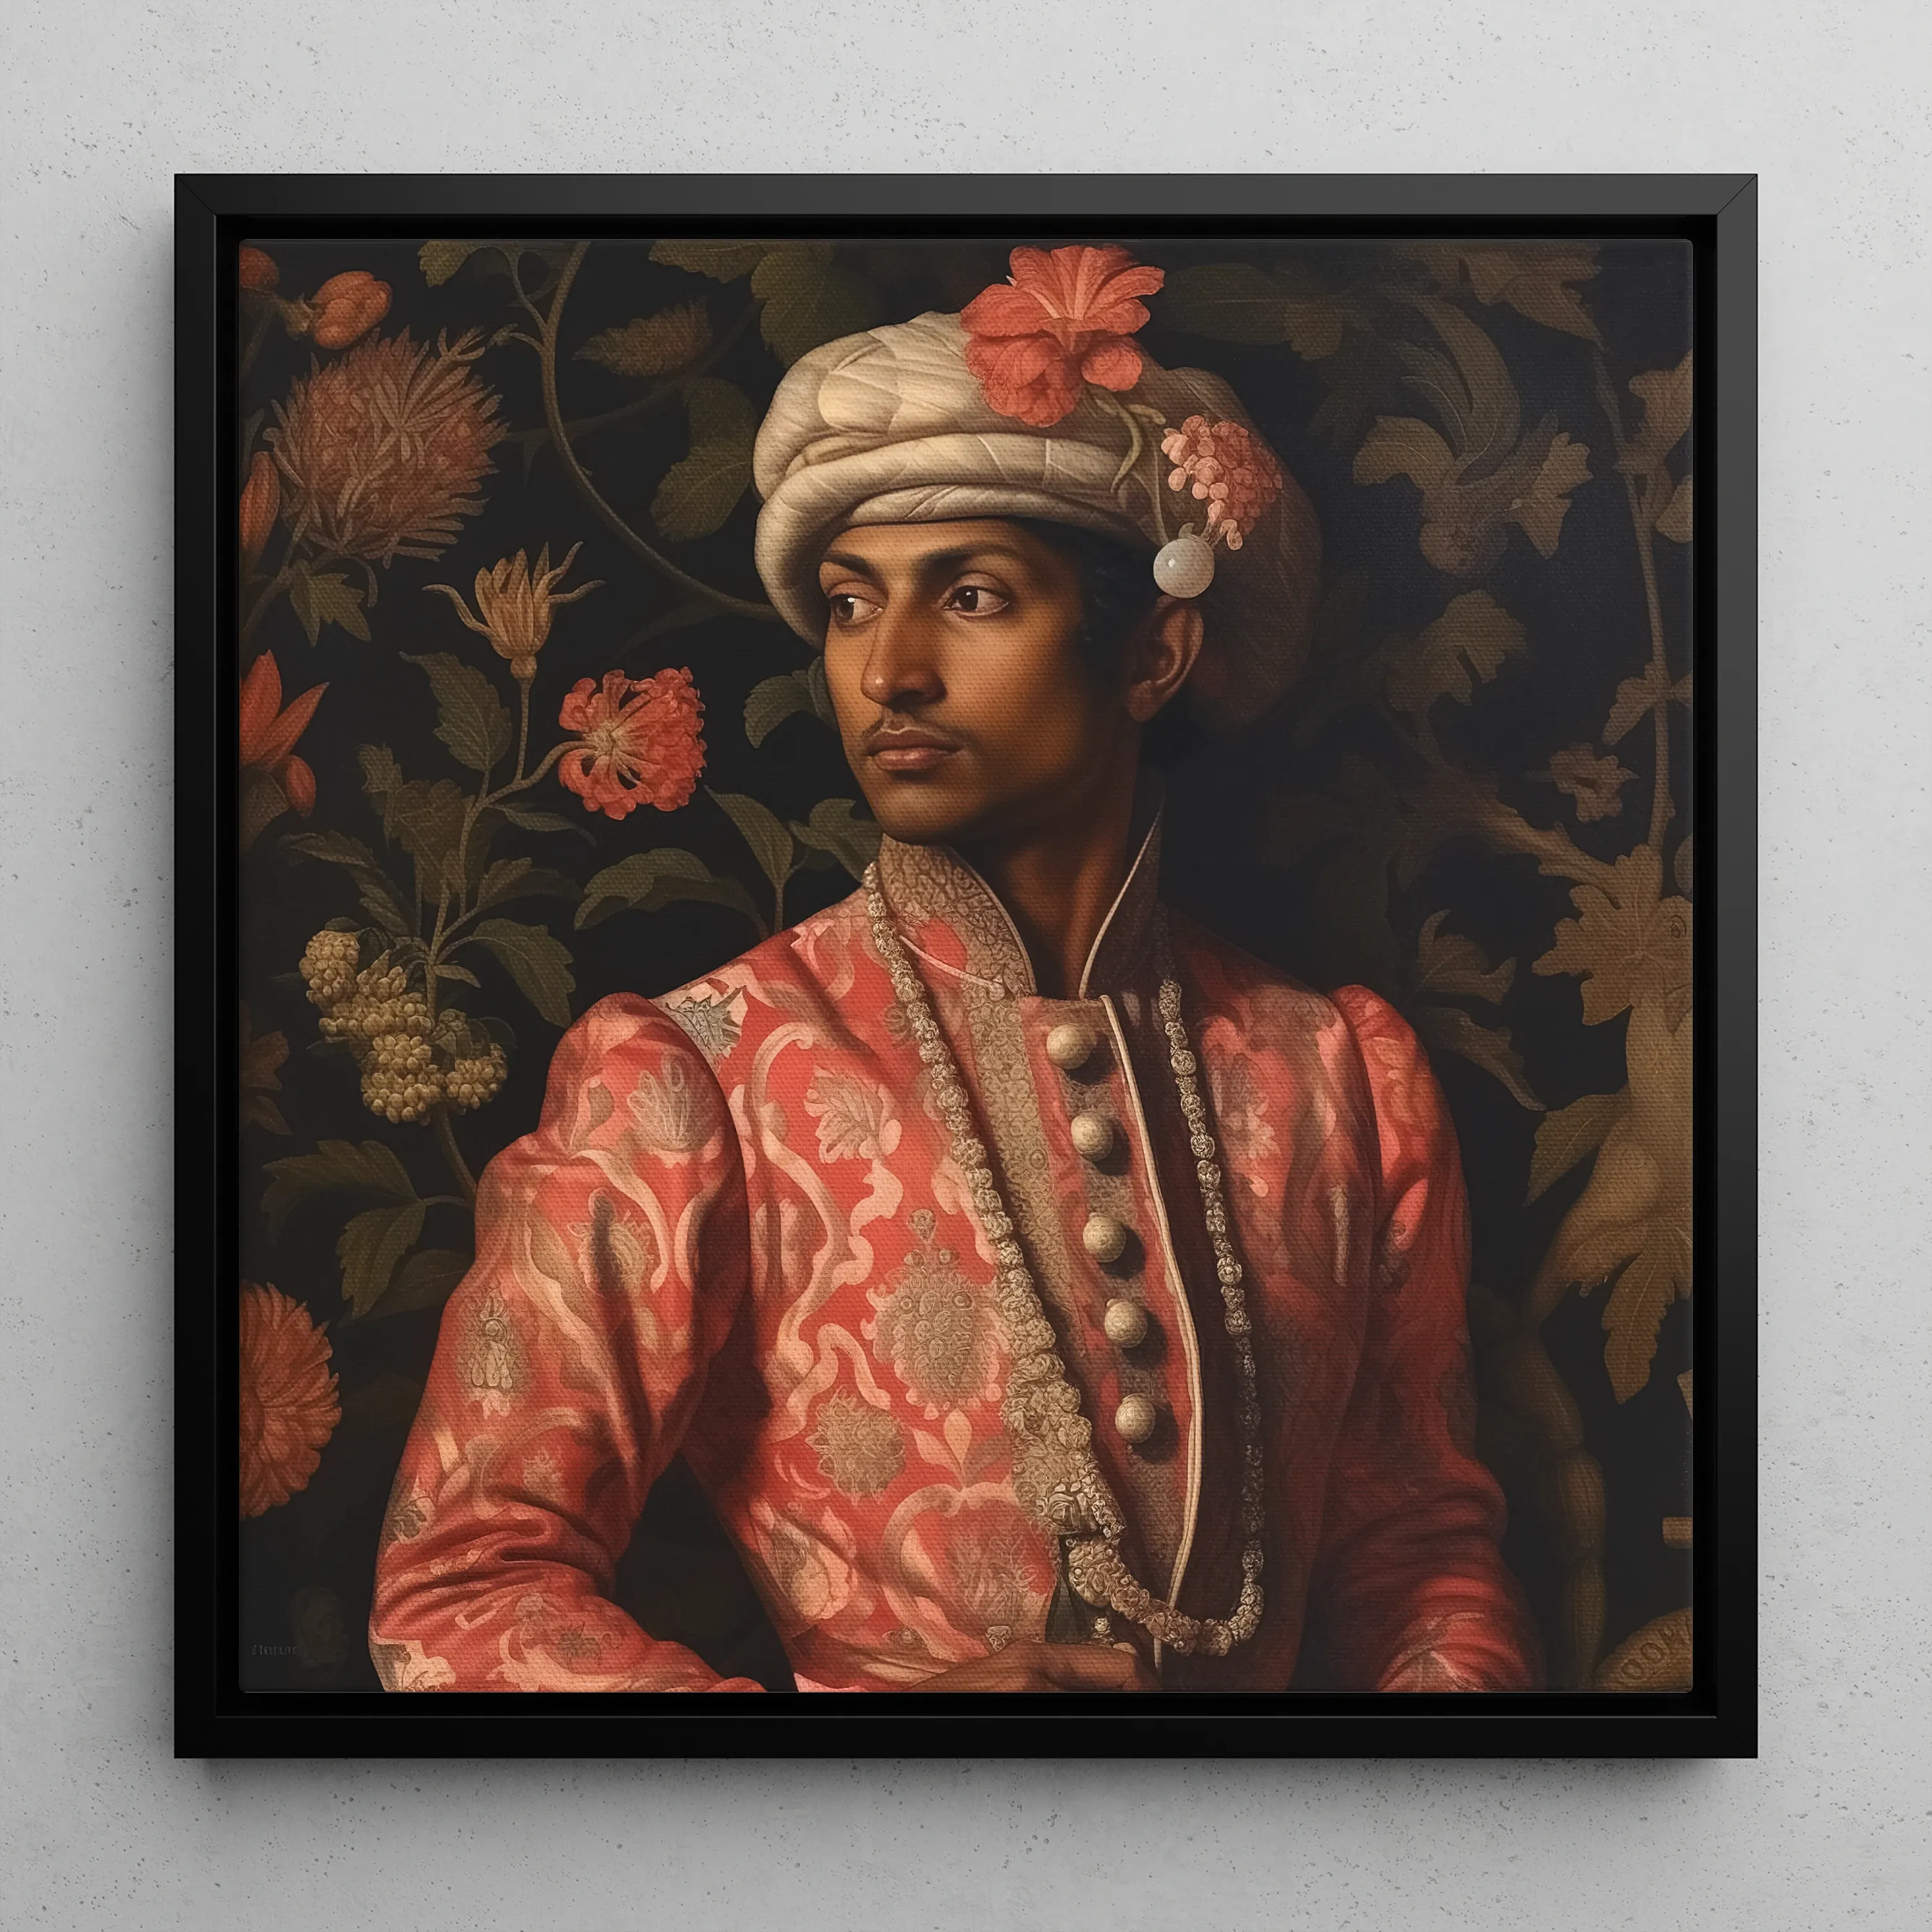 Prince Kaniyan - Gay India Tamil Royalty Queerart Canvas - 16’x16’ - Posters Prints & Visual Artwork - Aesthetic Art